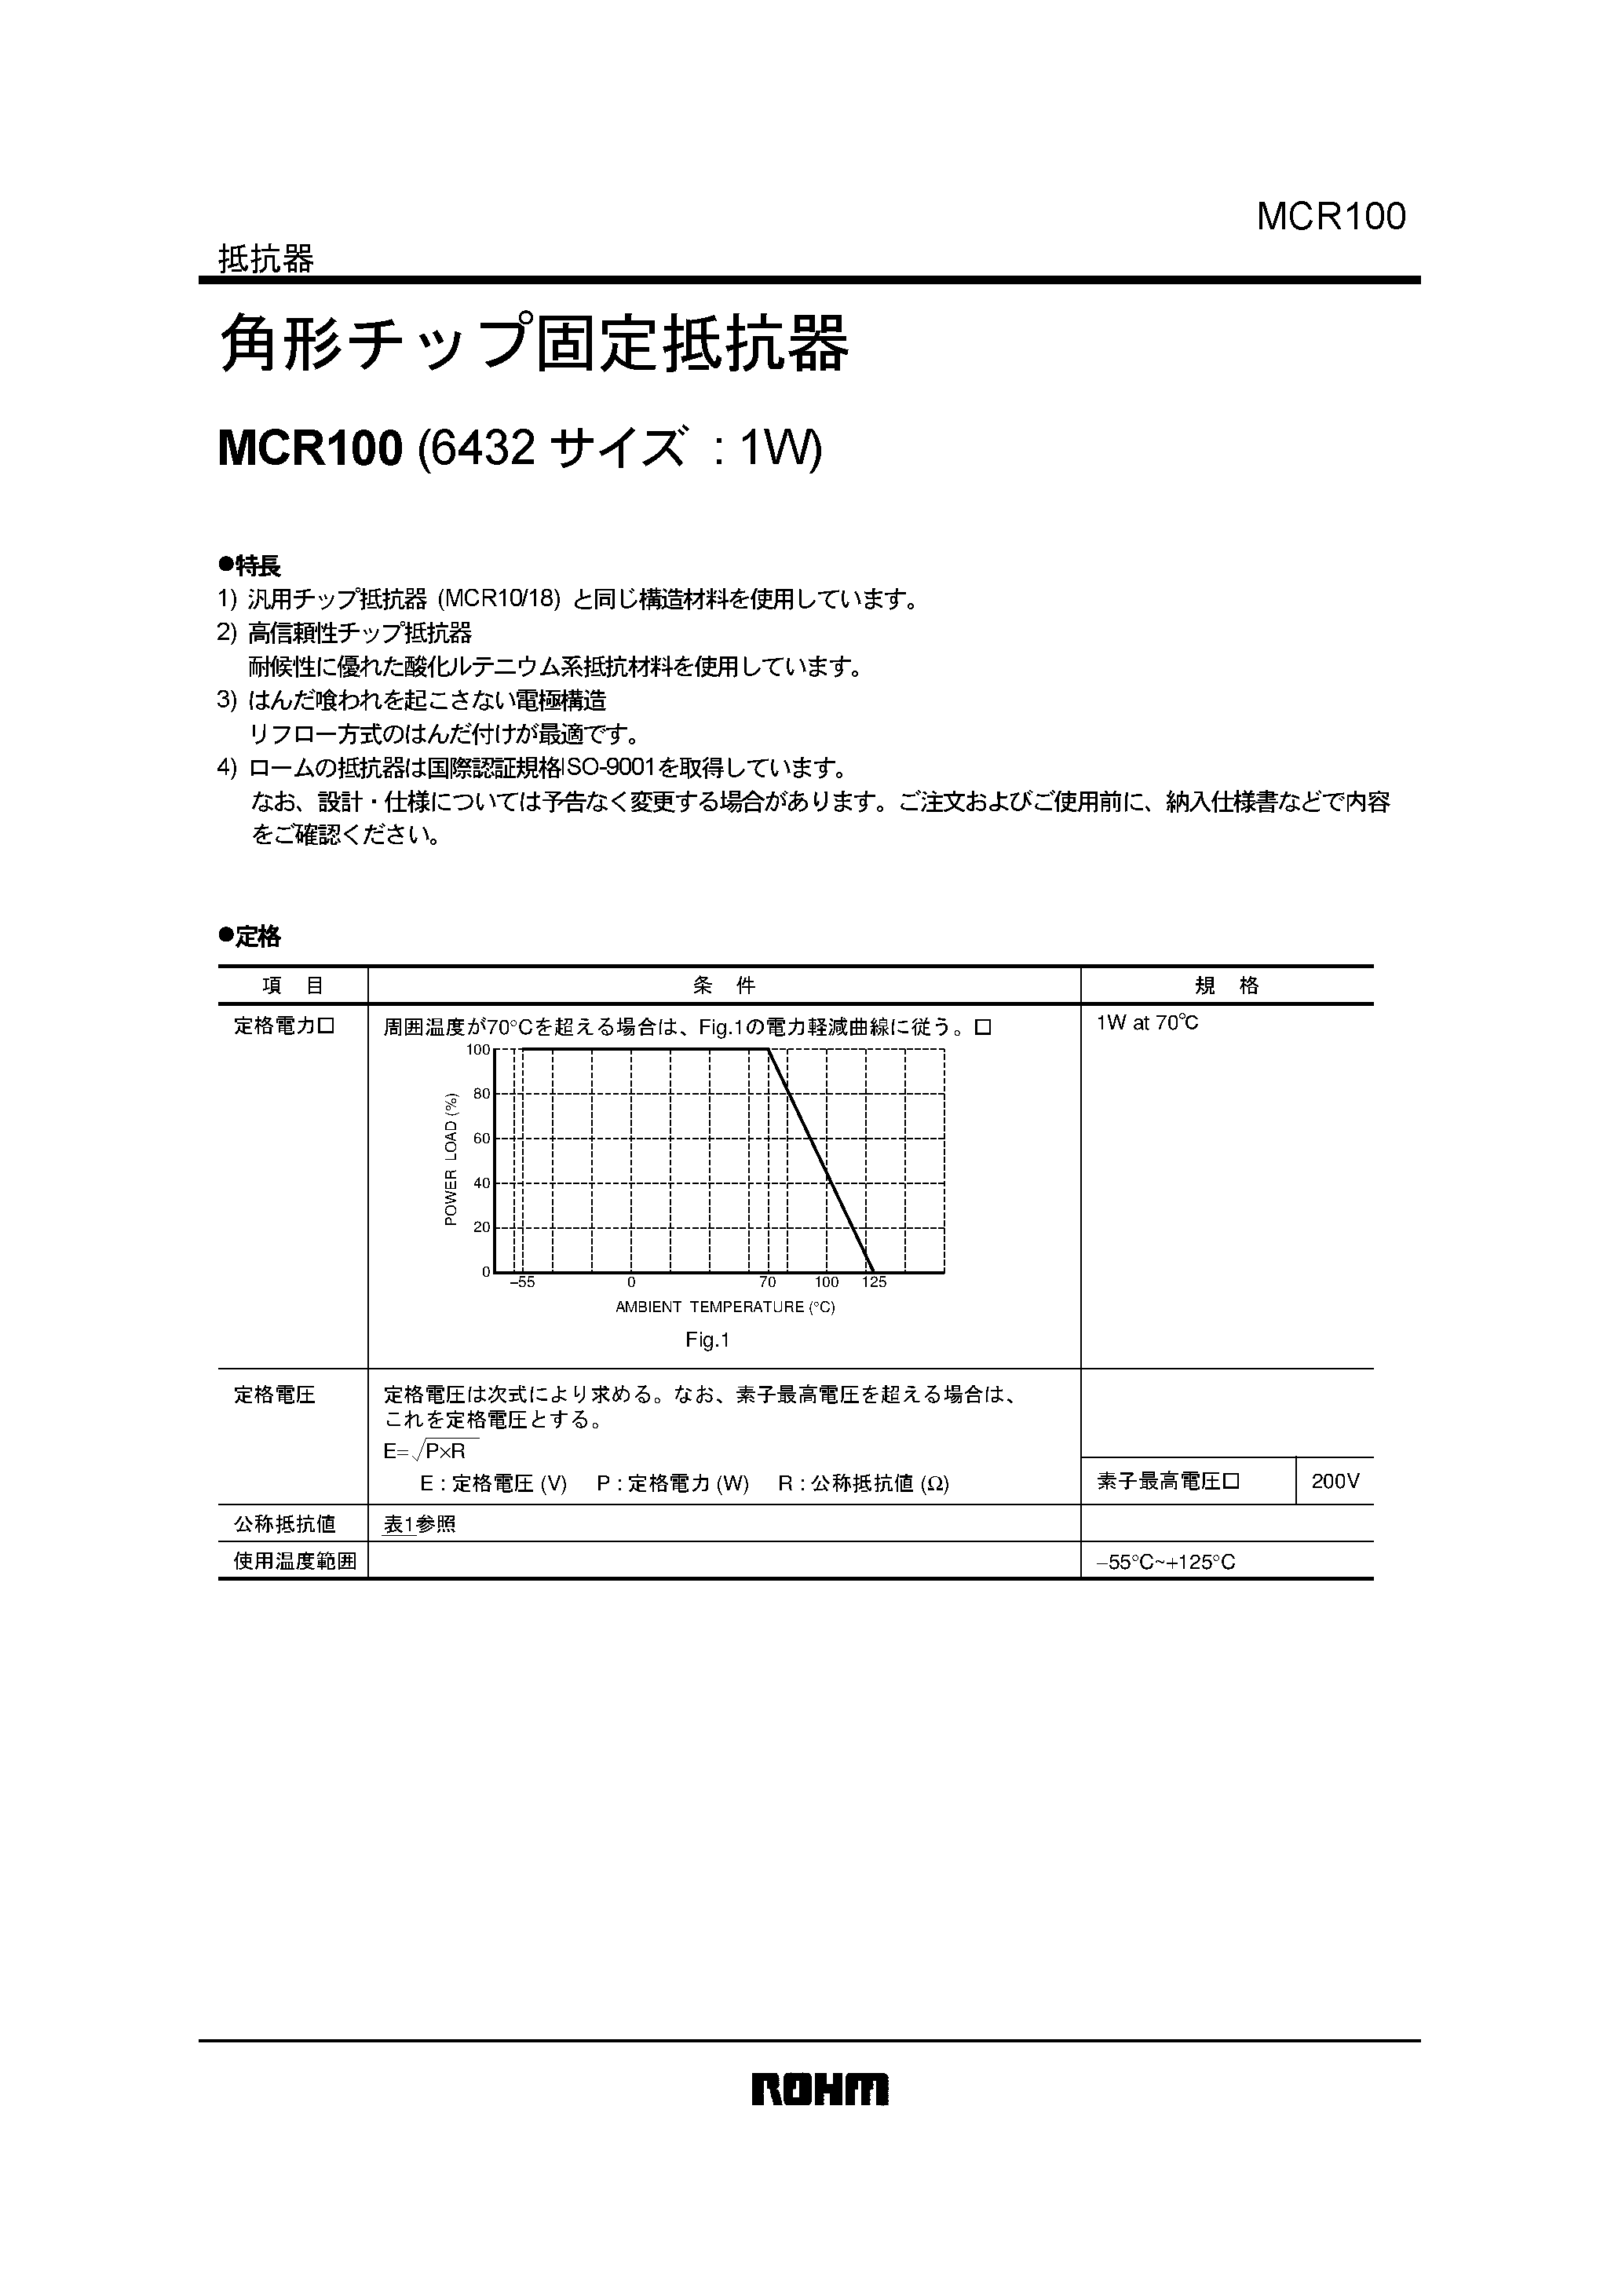 Datasheet MCR100 - MCR100 page 1